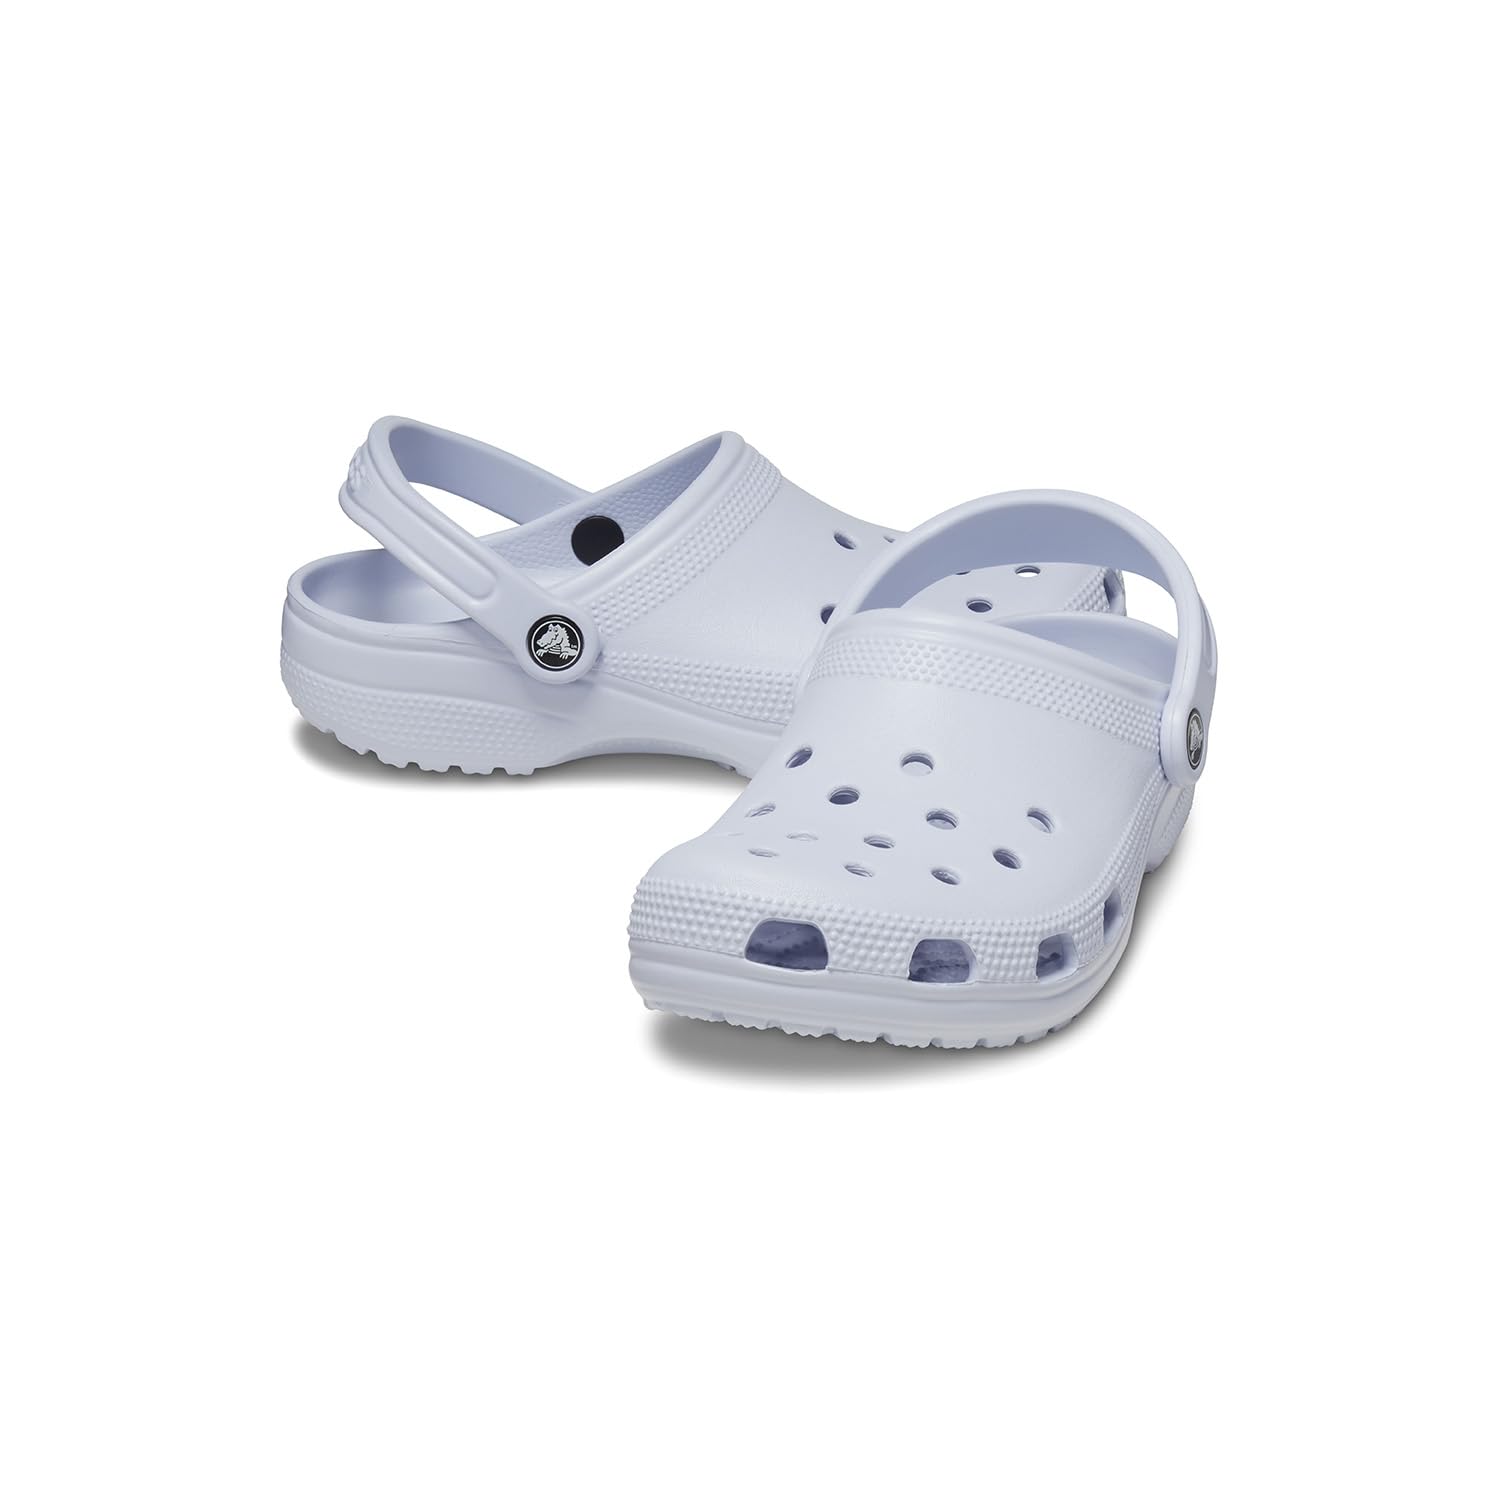 Crocs Unisex-Adult Classic Clog, Clogs for Women and Men